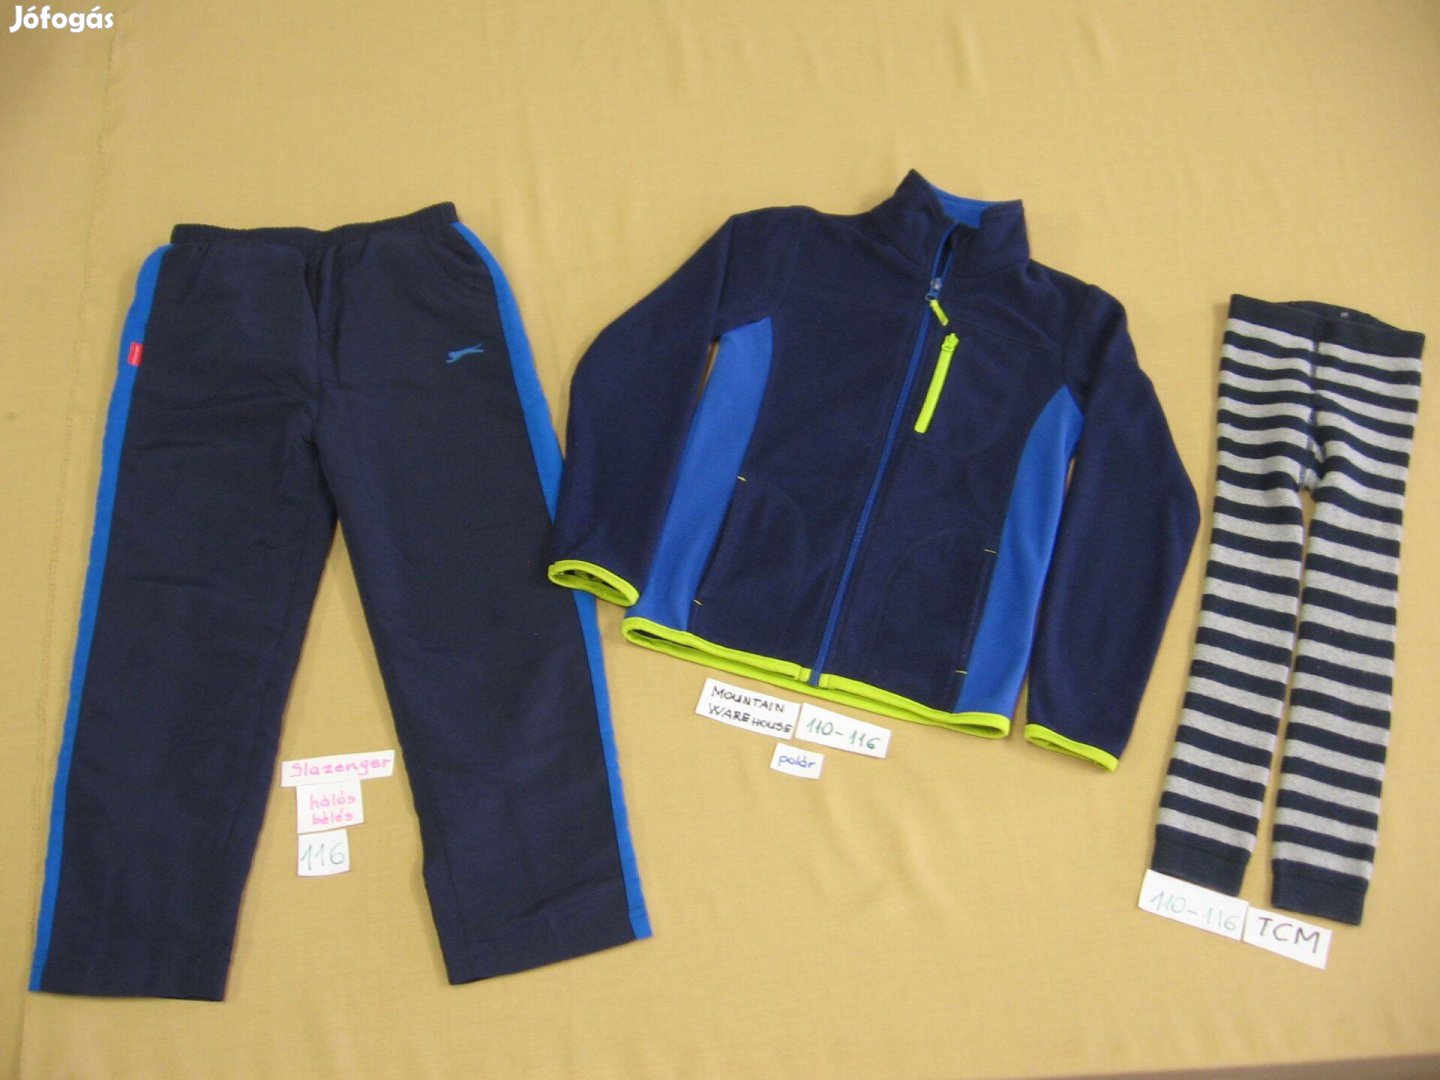 110-116-os kisfiú ruhacsomag (nadrág, polár pulcsi, vastagabb harisnya